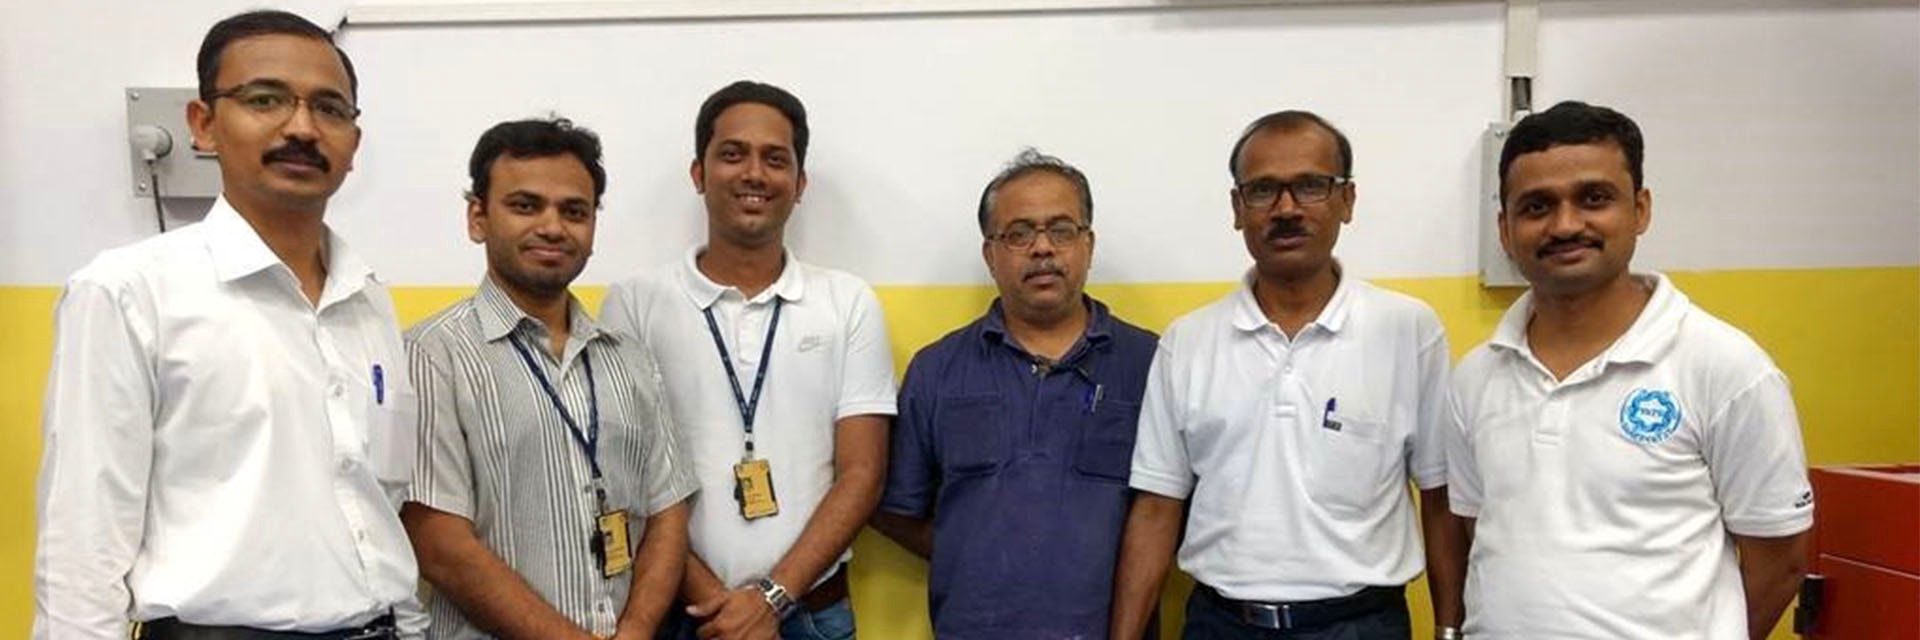 A group photo of the Tata Motors team